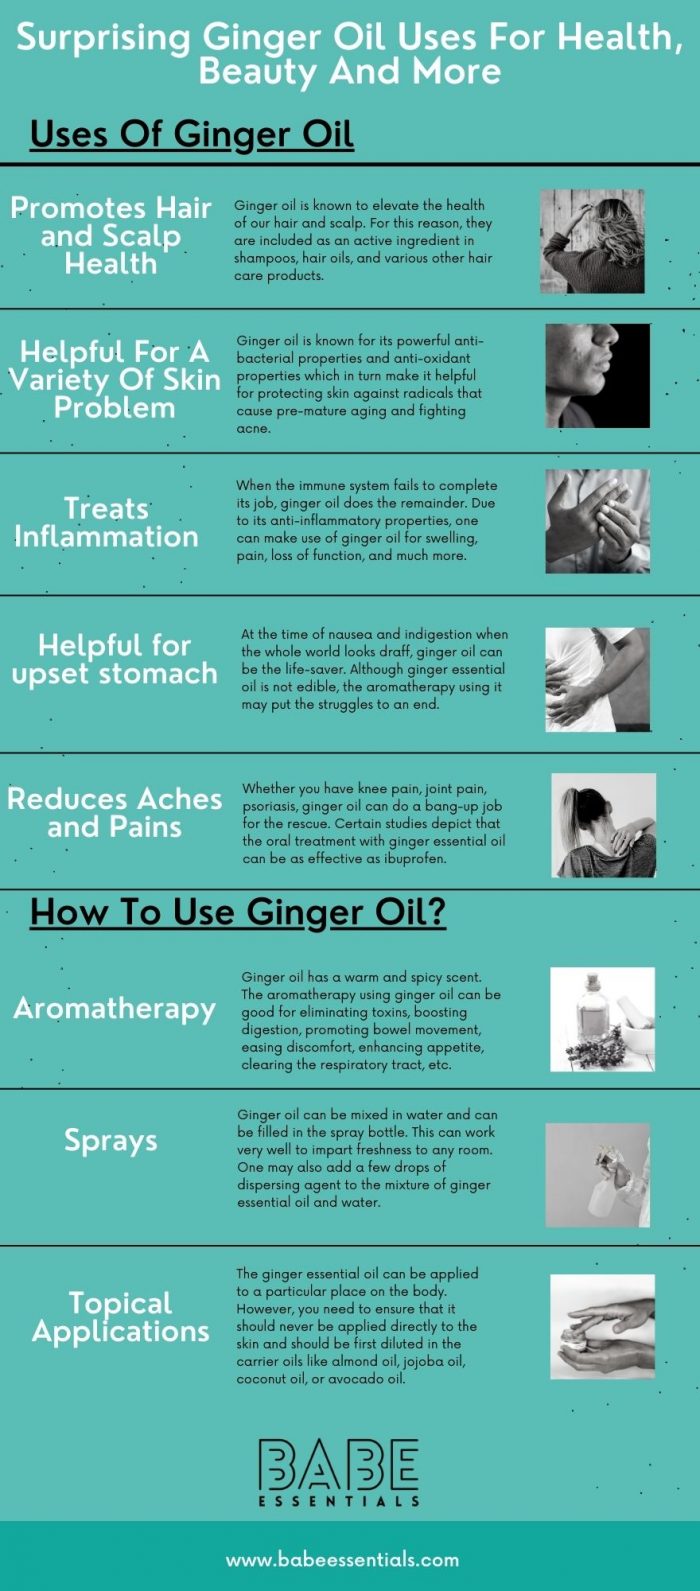 Surprising Ginger Oil Uses For Health & Beauty